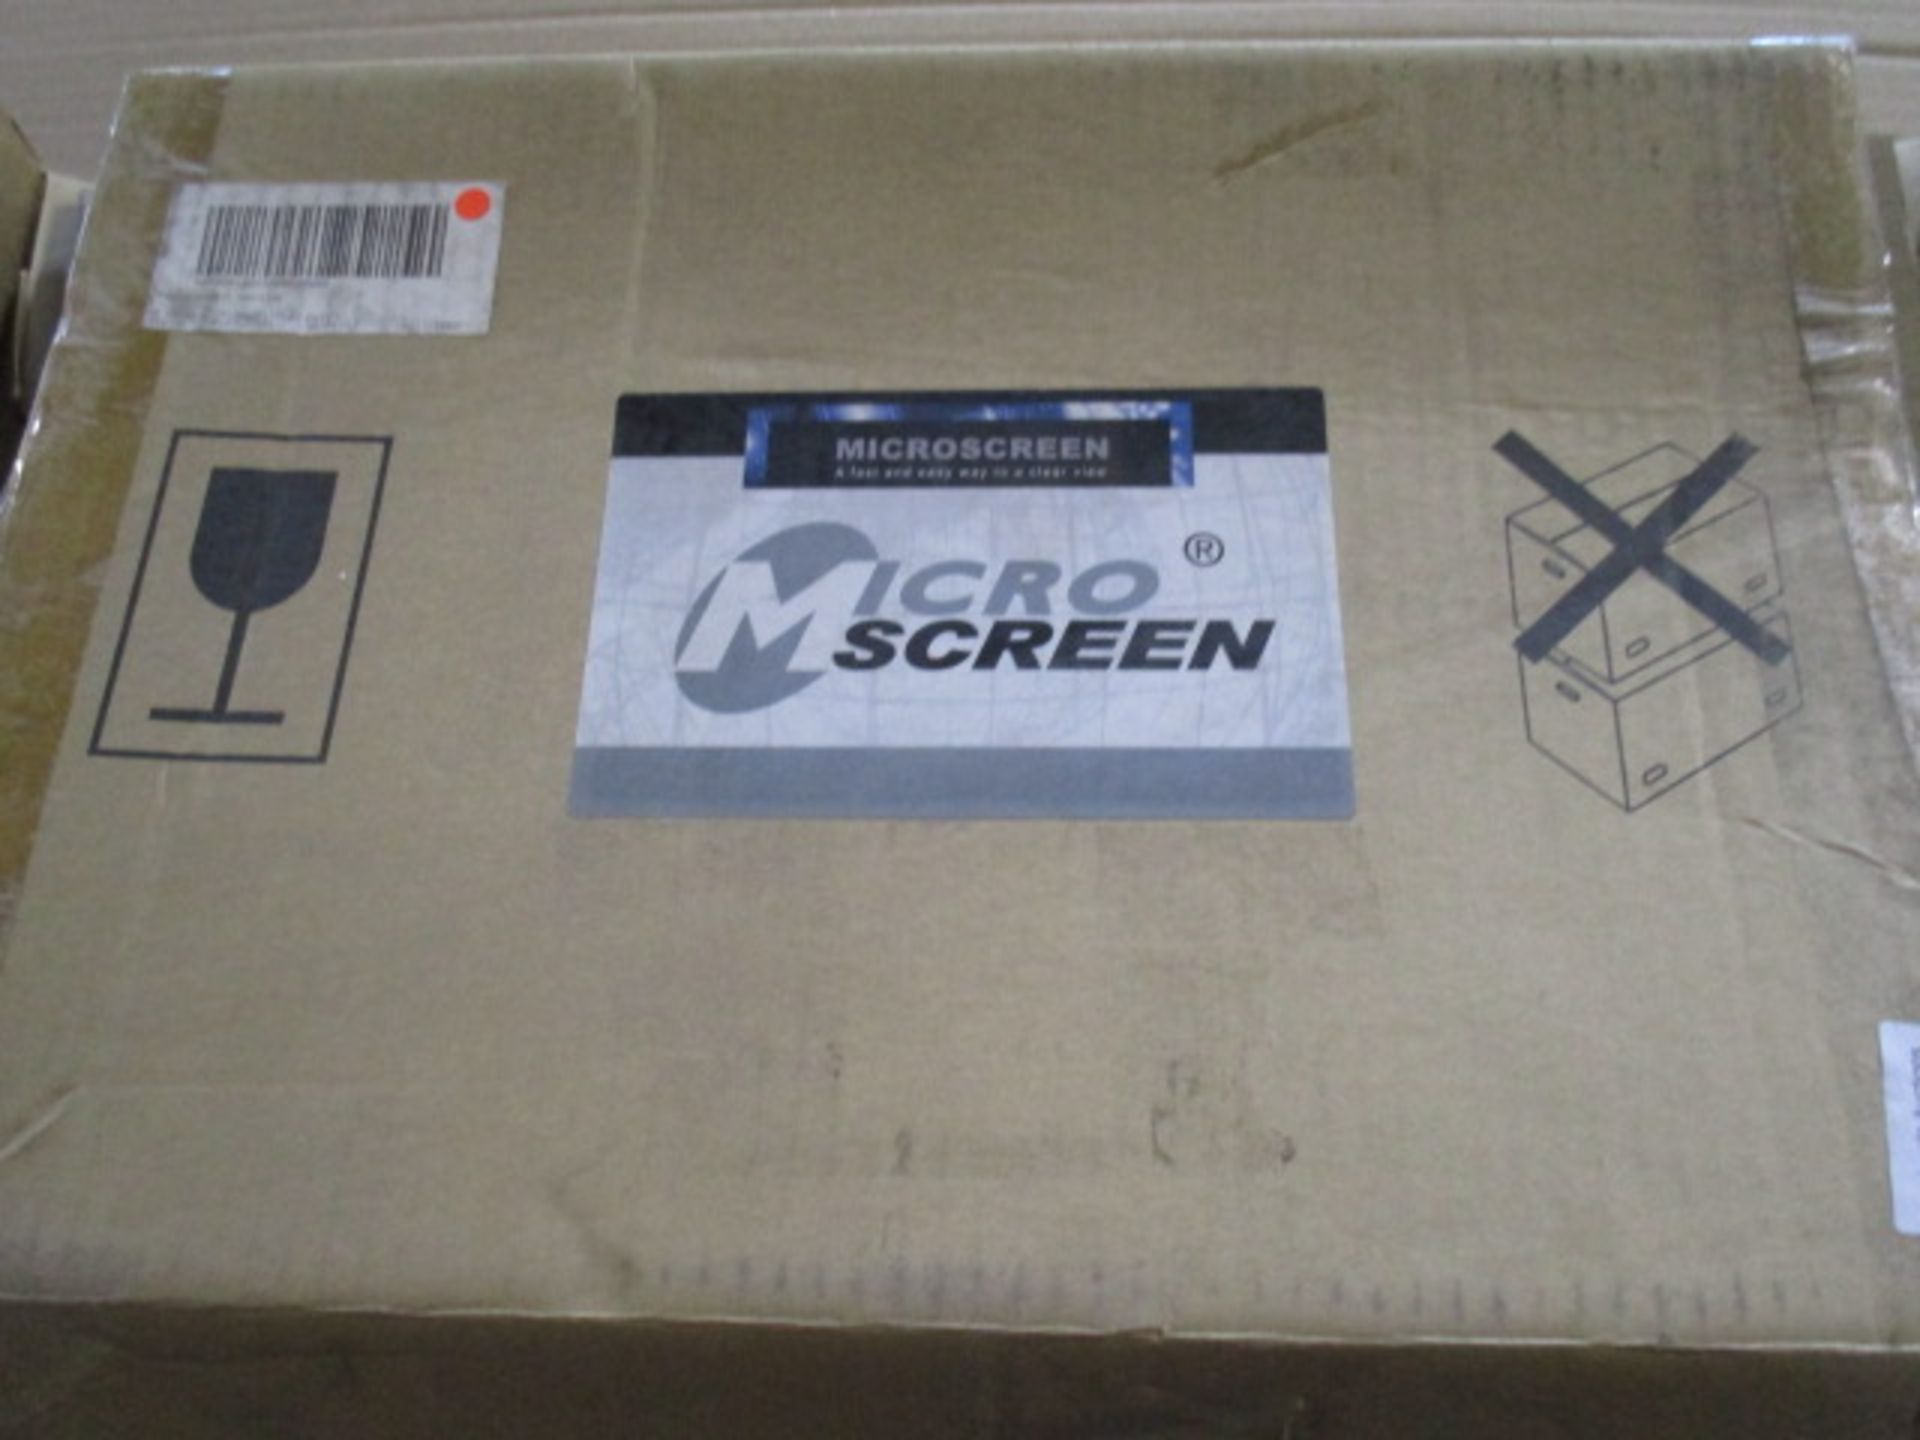 Microscreen unit